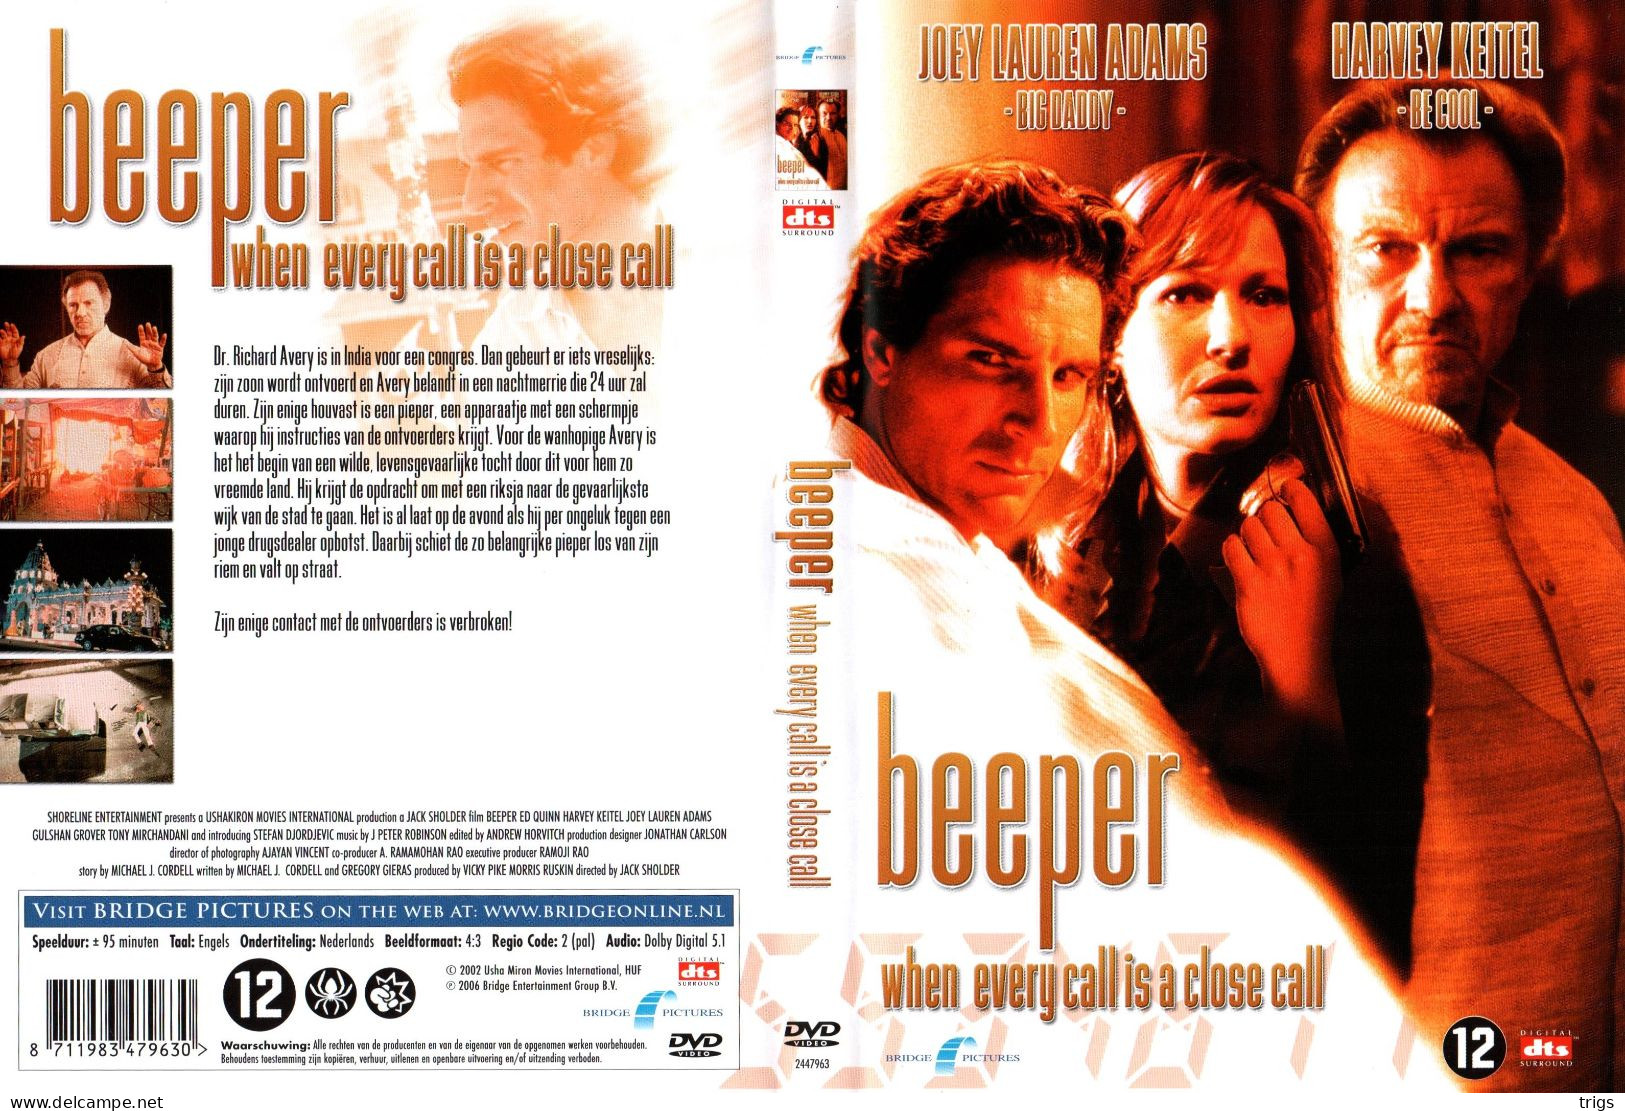 DVD - Beeper - Crime